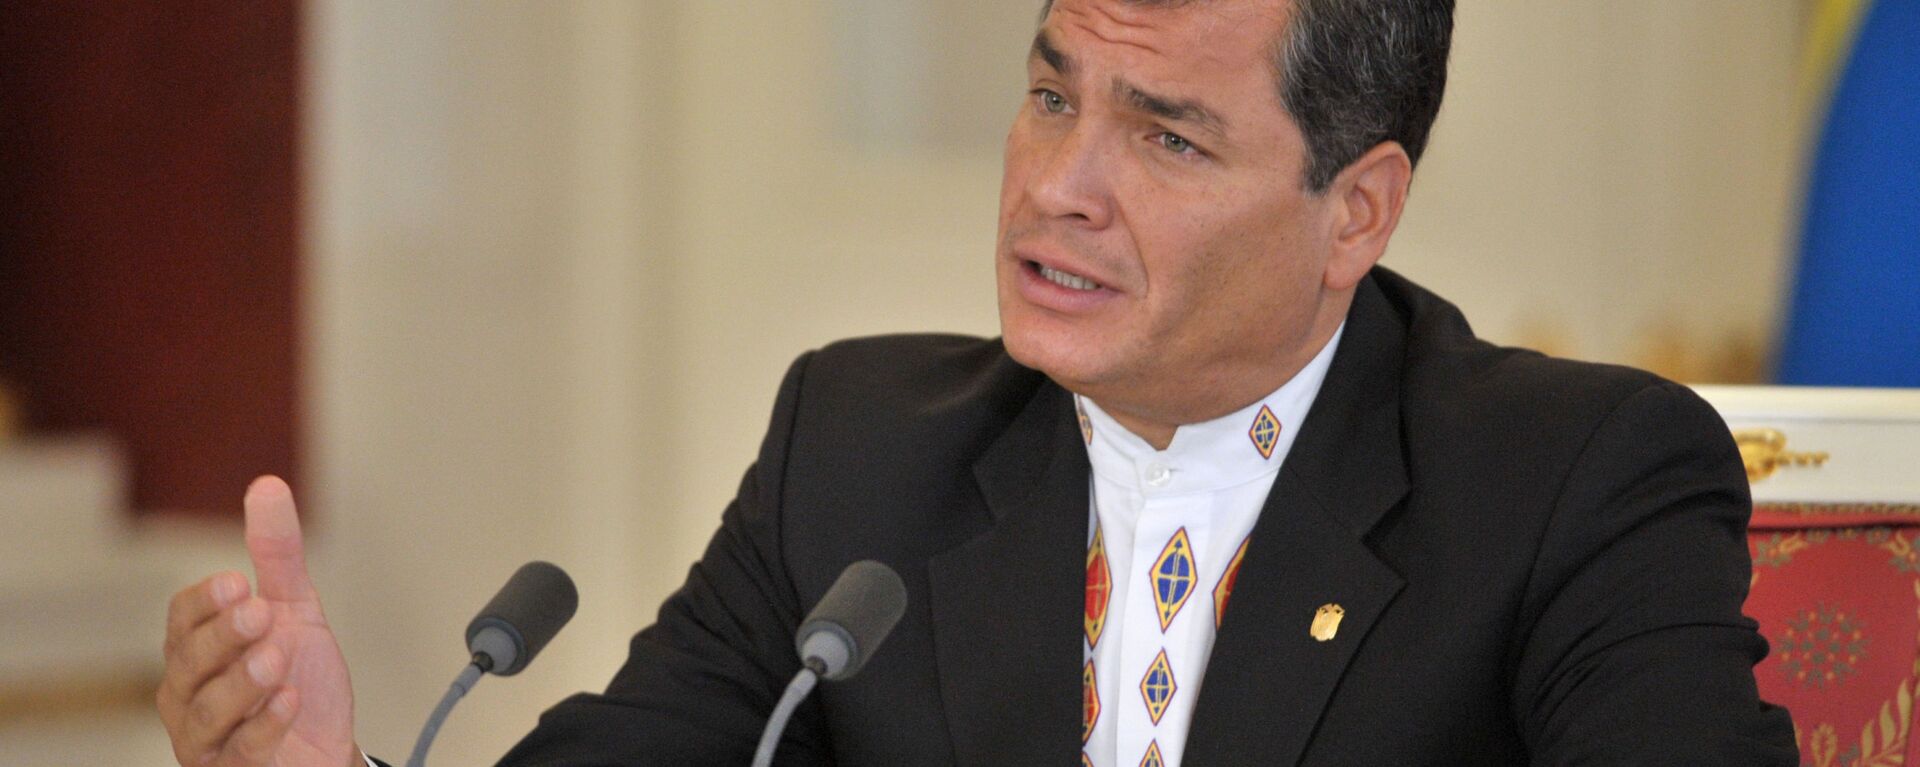 Rafael Correa, expresidente de Ecuador - Sputnik Mundo, 1920, 11.02.2021